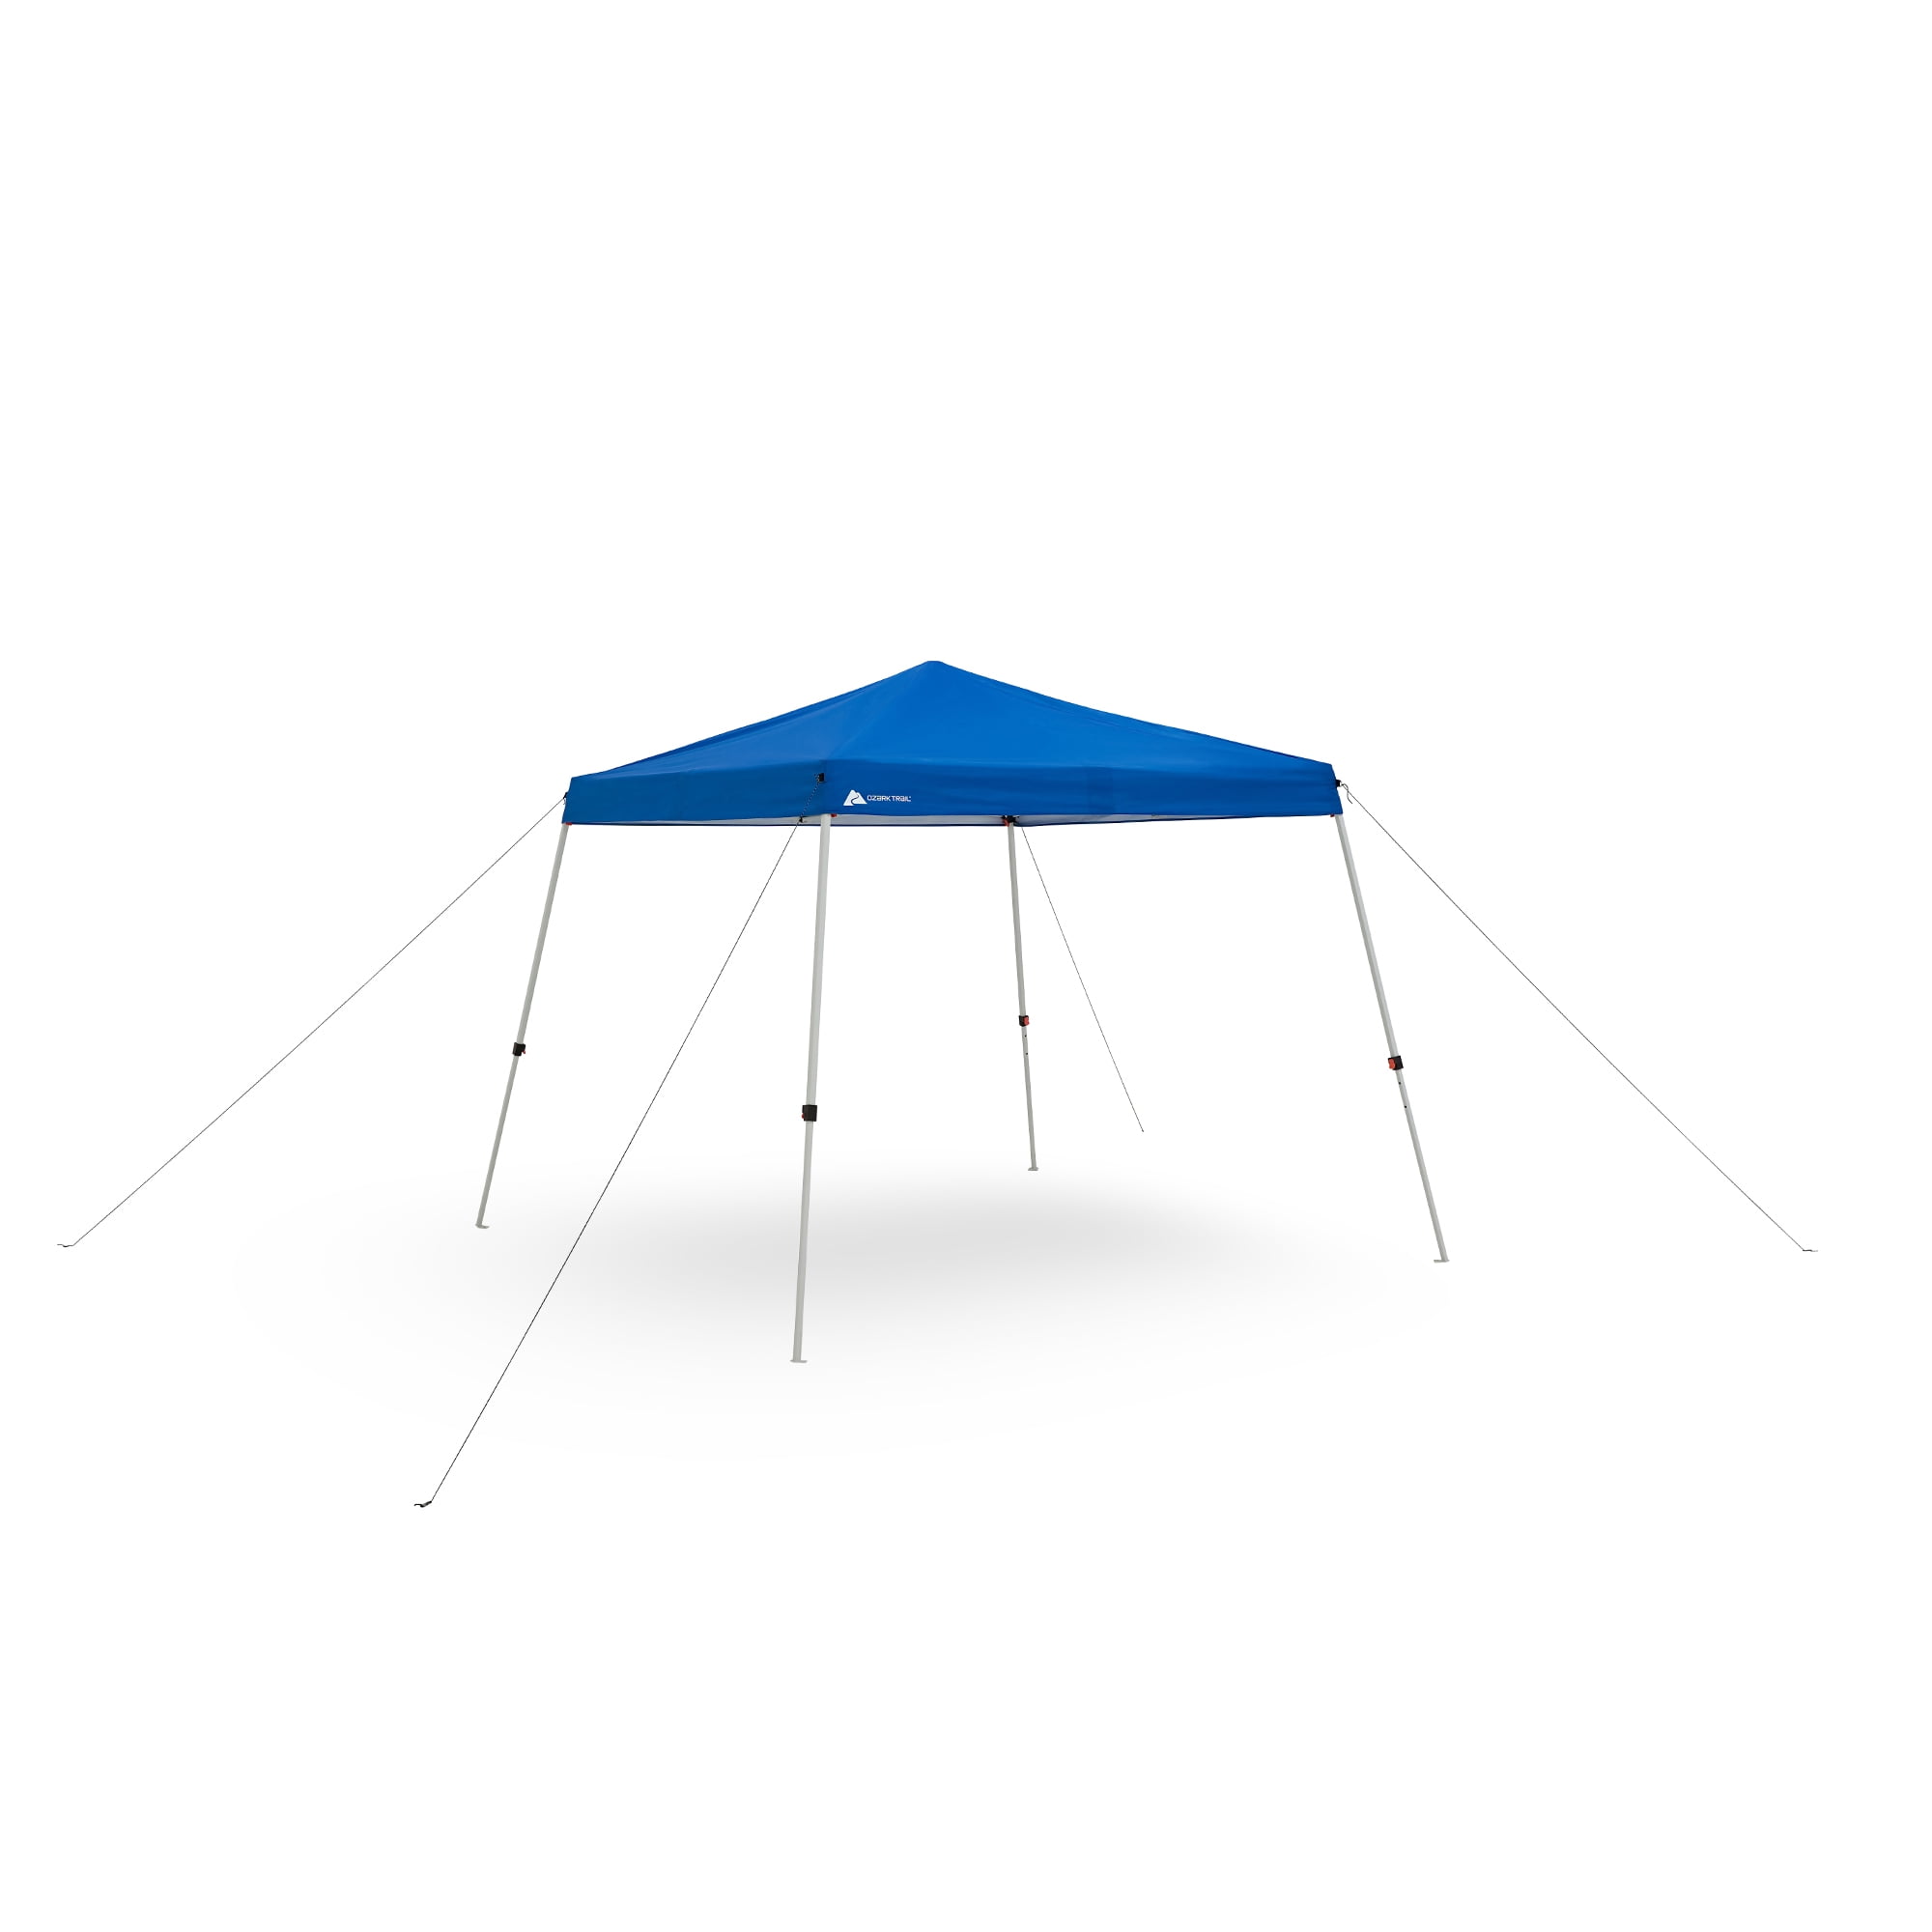 Ozark Trail 10' x 10' Instant Slant Leg Pop-up Canopy Outdoor Shading Shelter, Blue